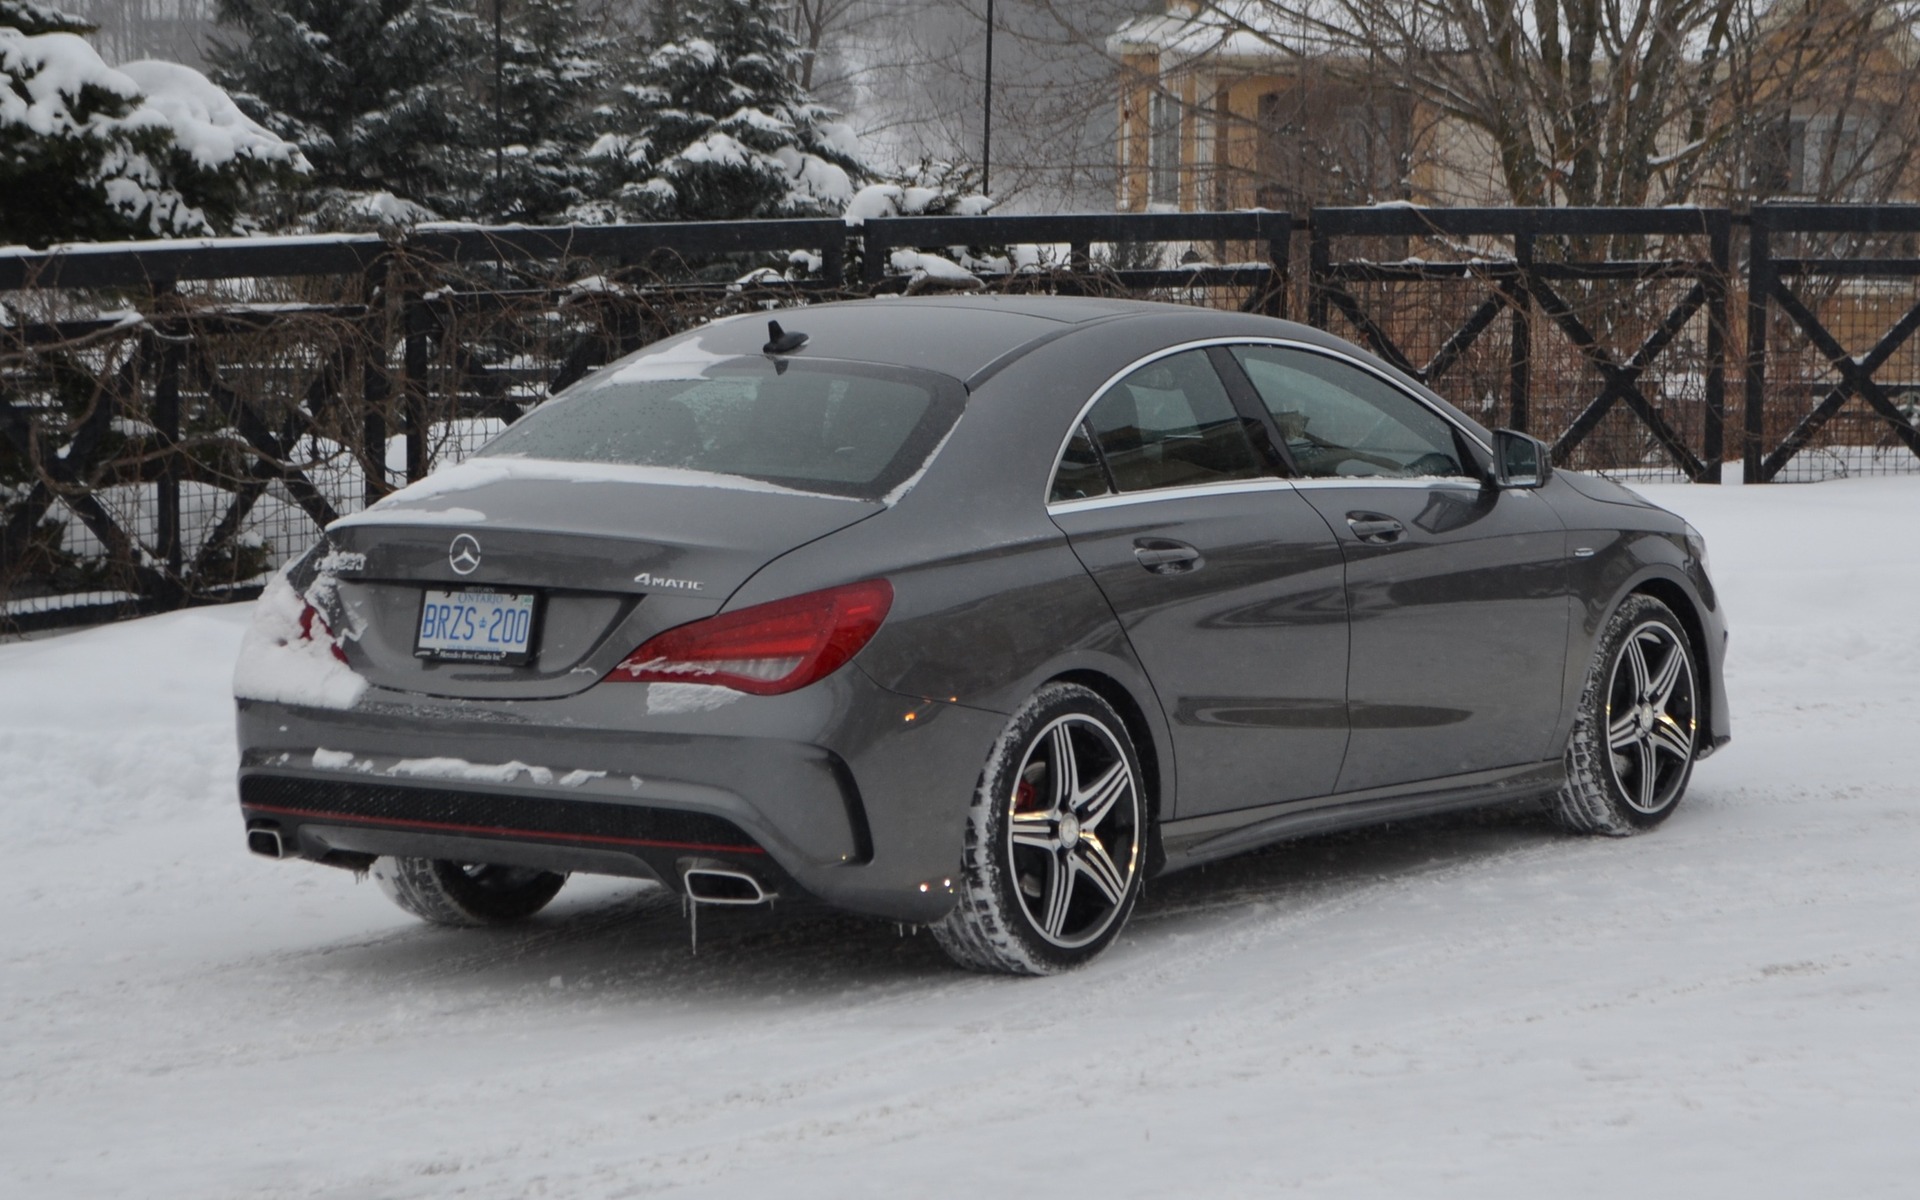 Mercedes cla 250 in snow #5